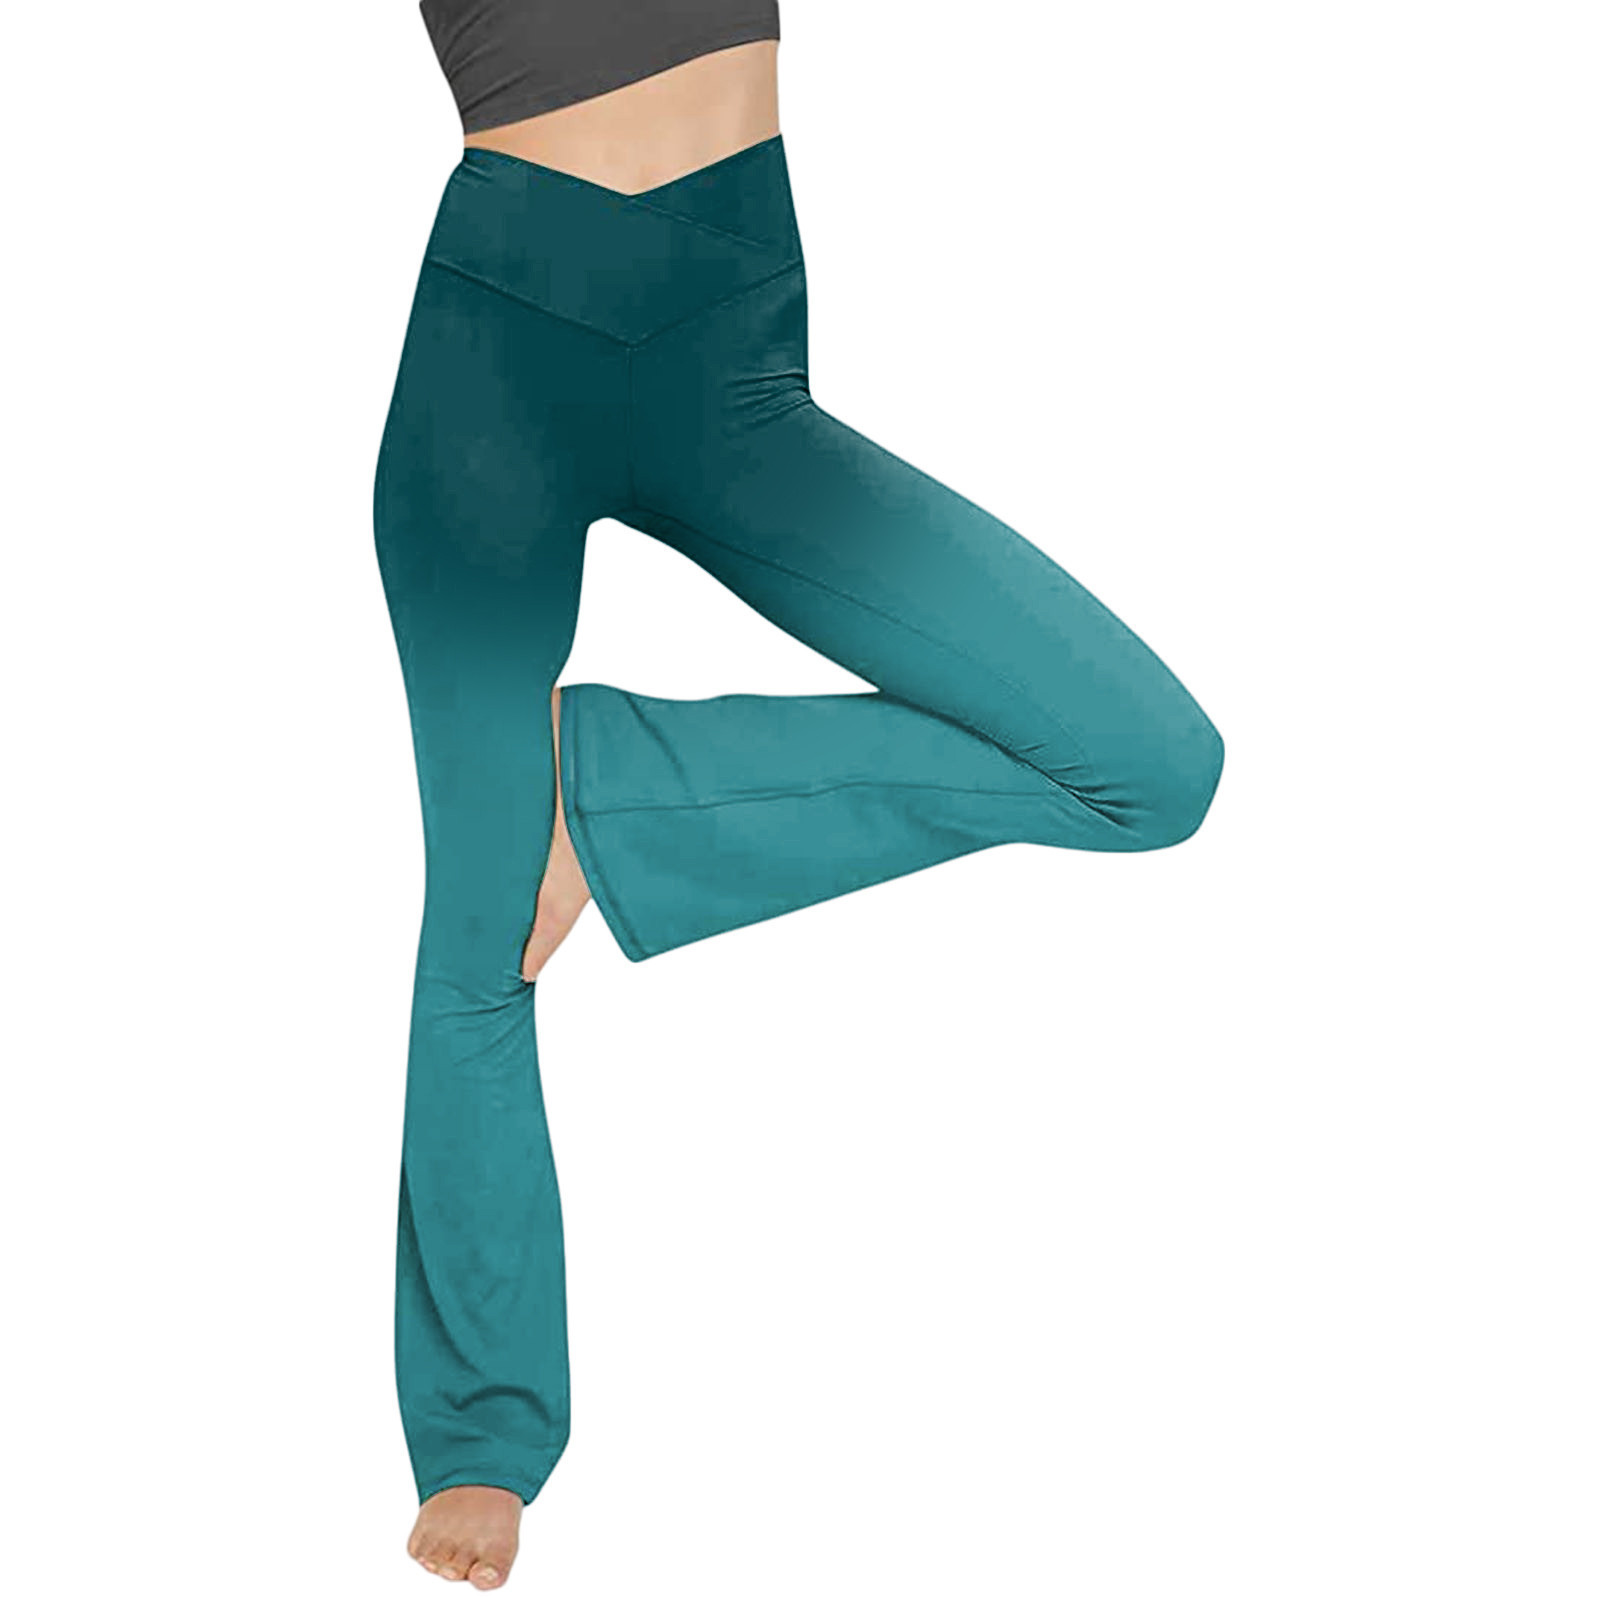 printed yoga pants outfit